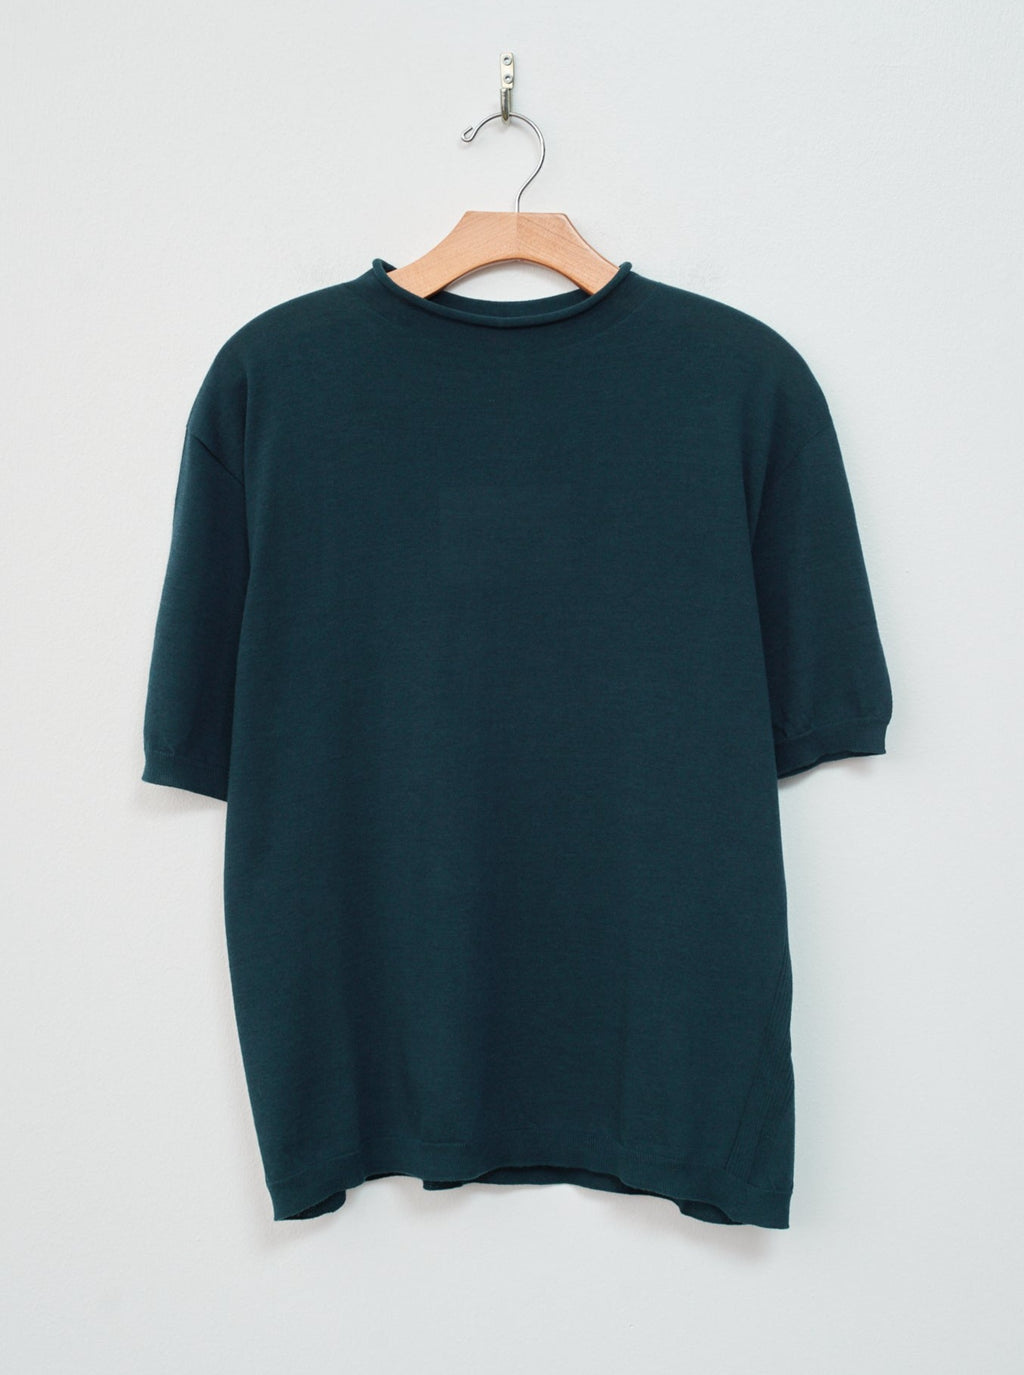 Namu Shop - Bielo Griff T-Shirt - Forest Green